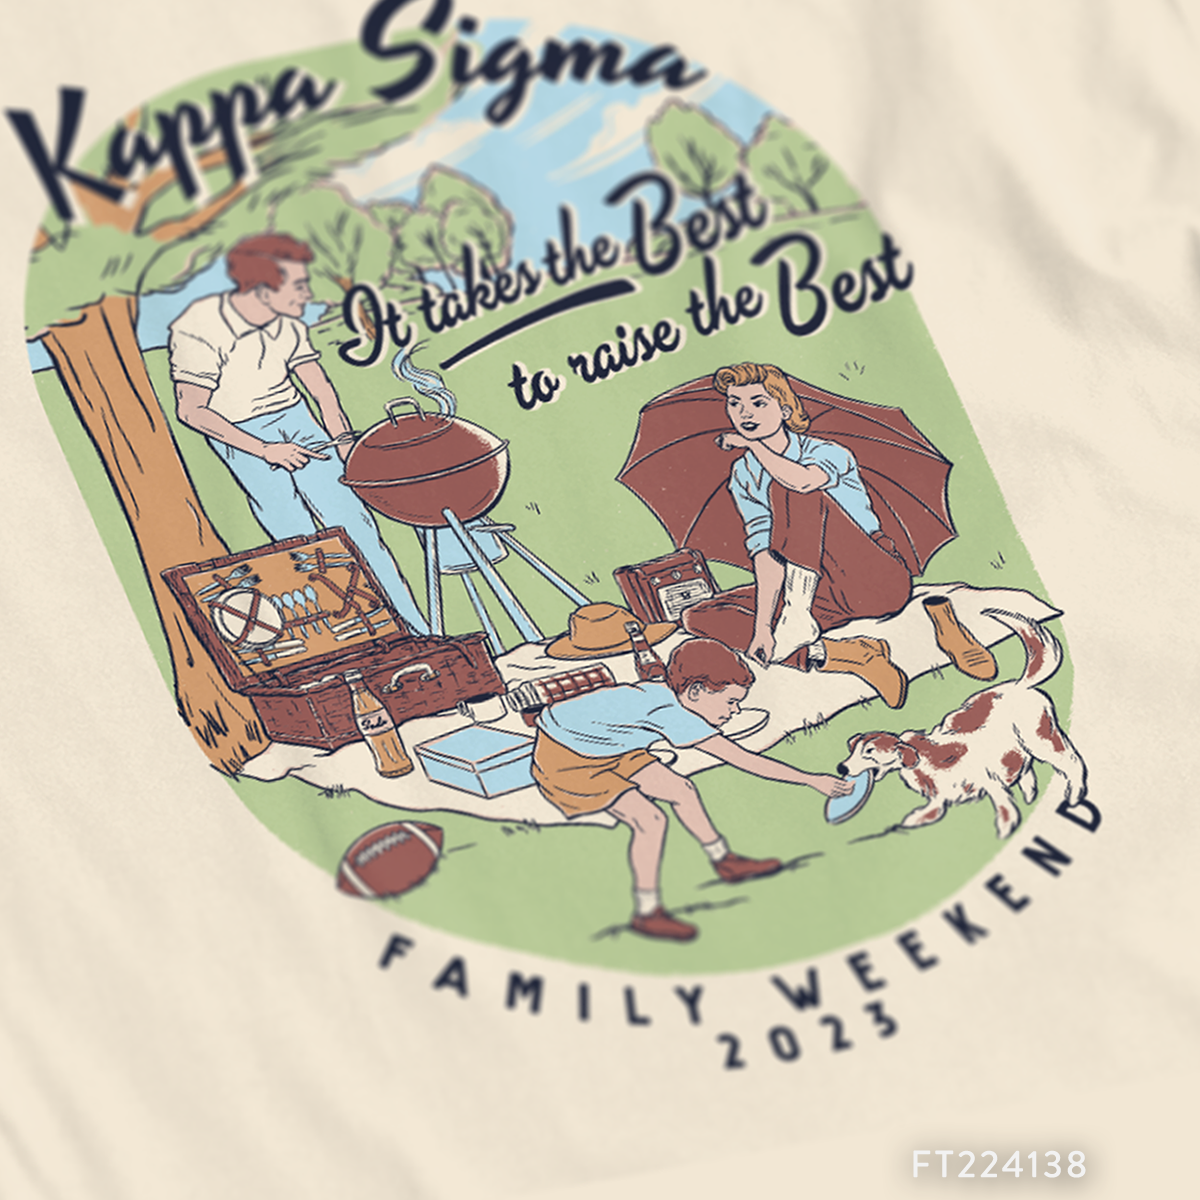 Kappa Sigma Family Weekend T-Shirt Design